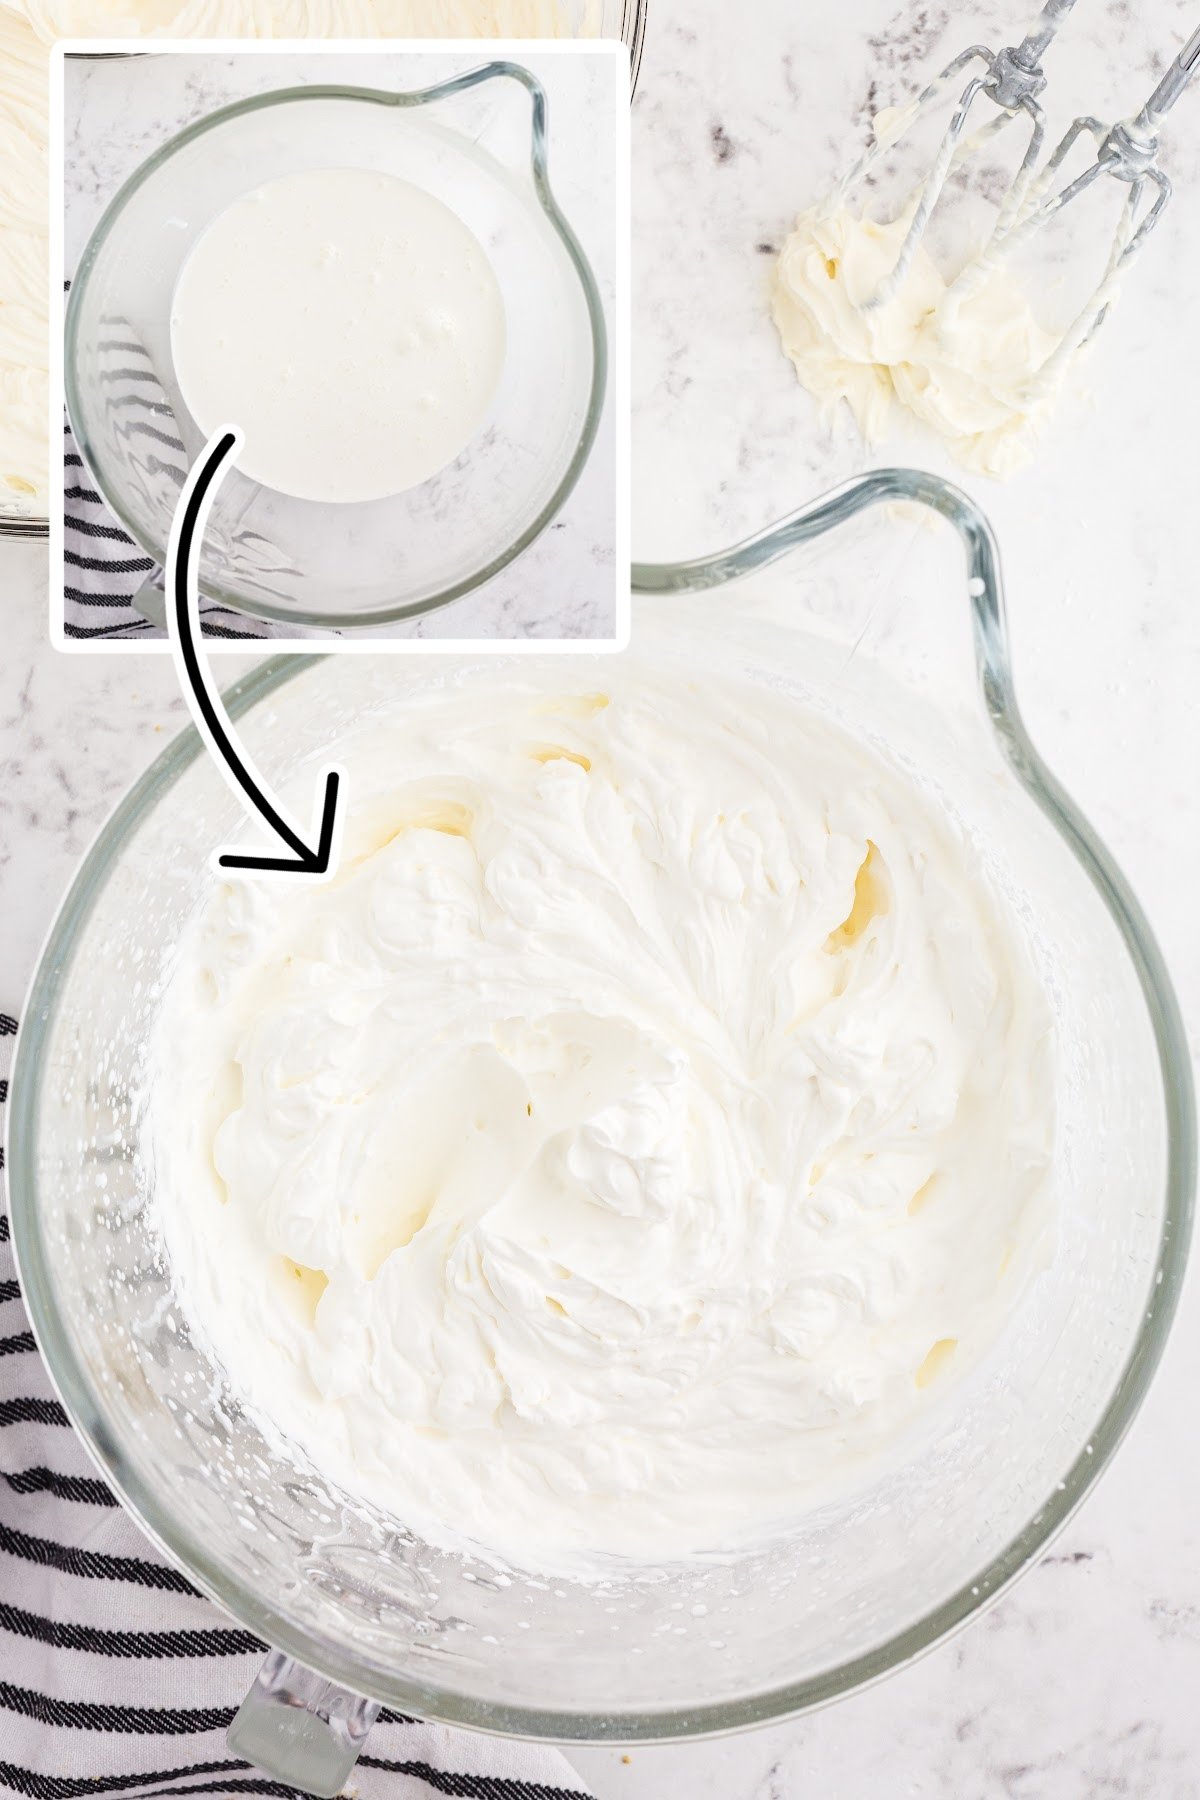 Making homemade whipped cream.